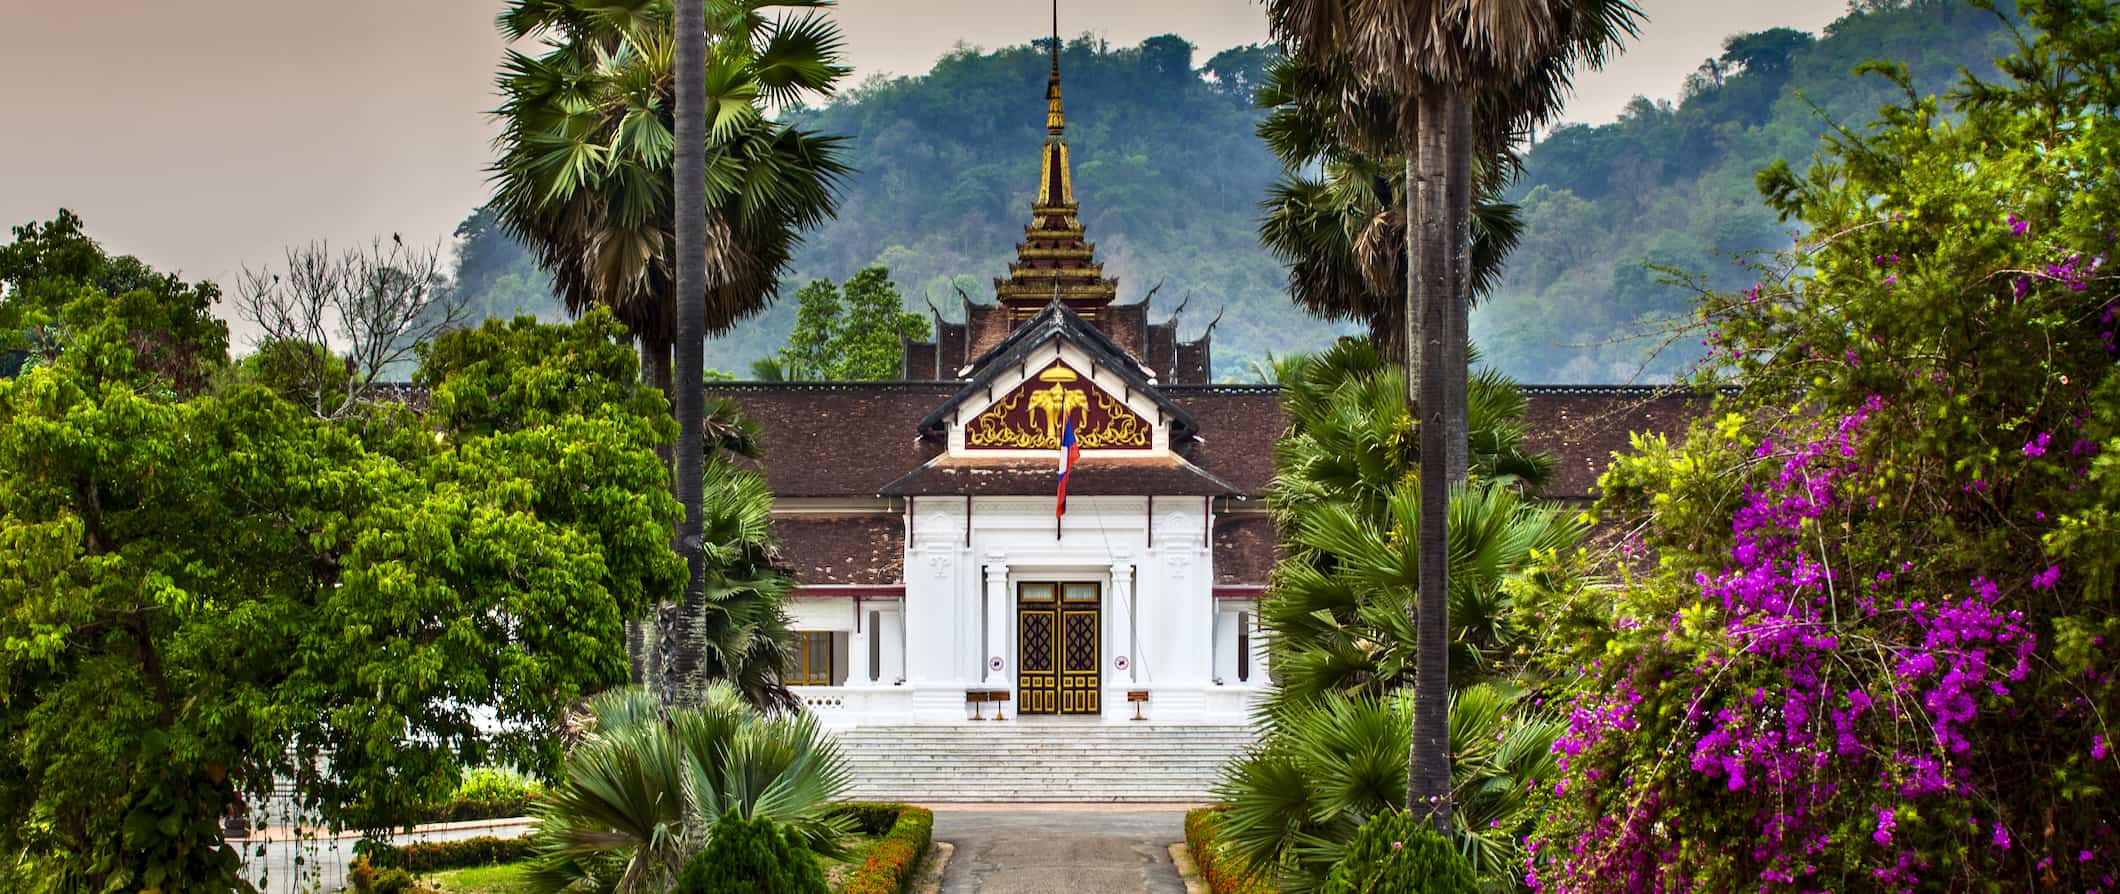 A historic religious building in Luang Prabang, Laos